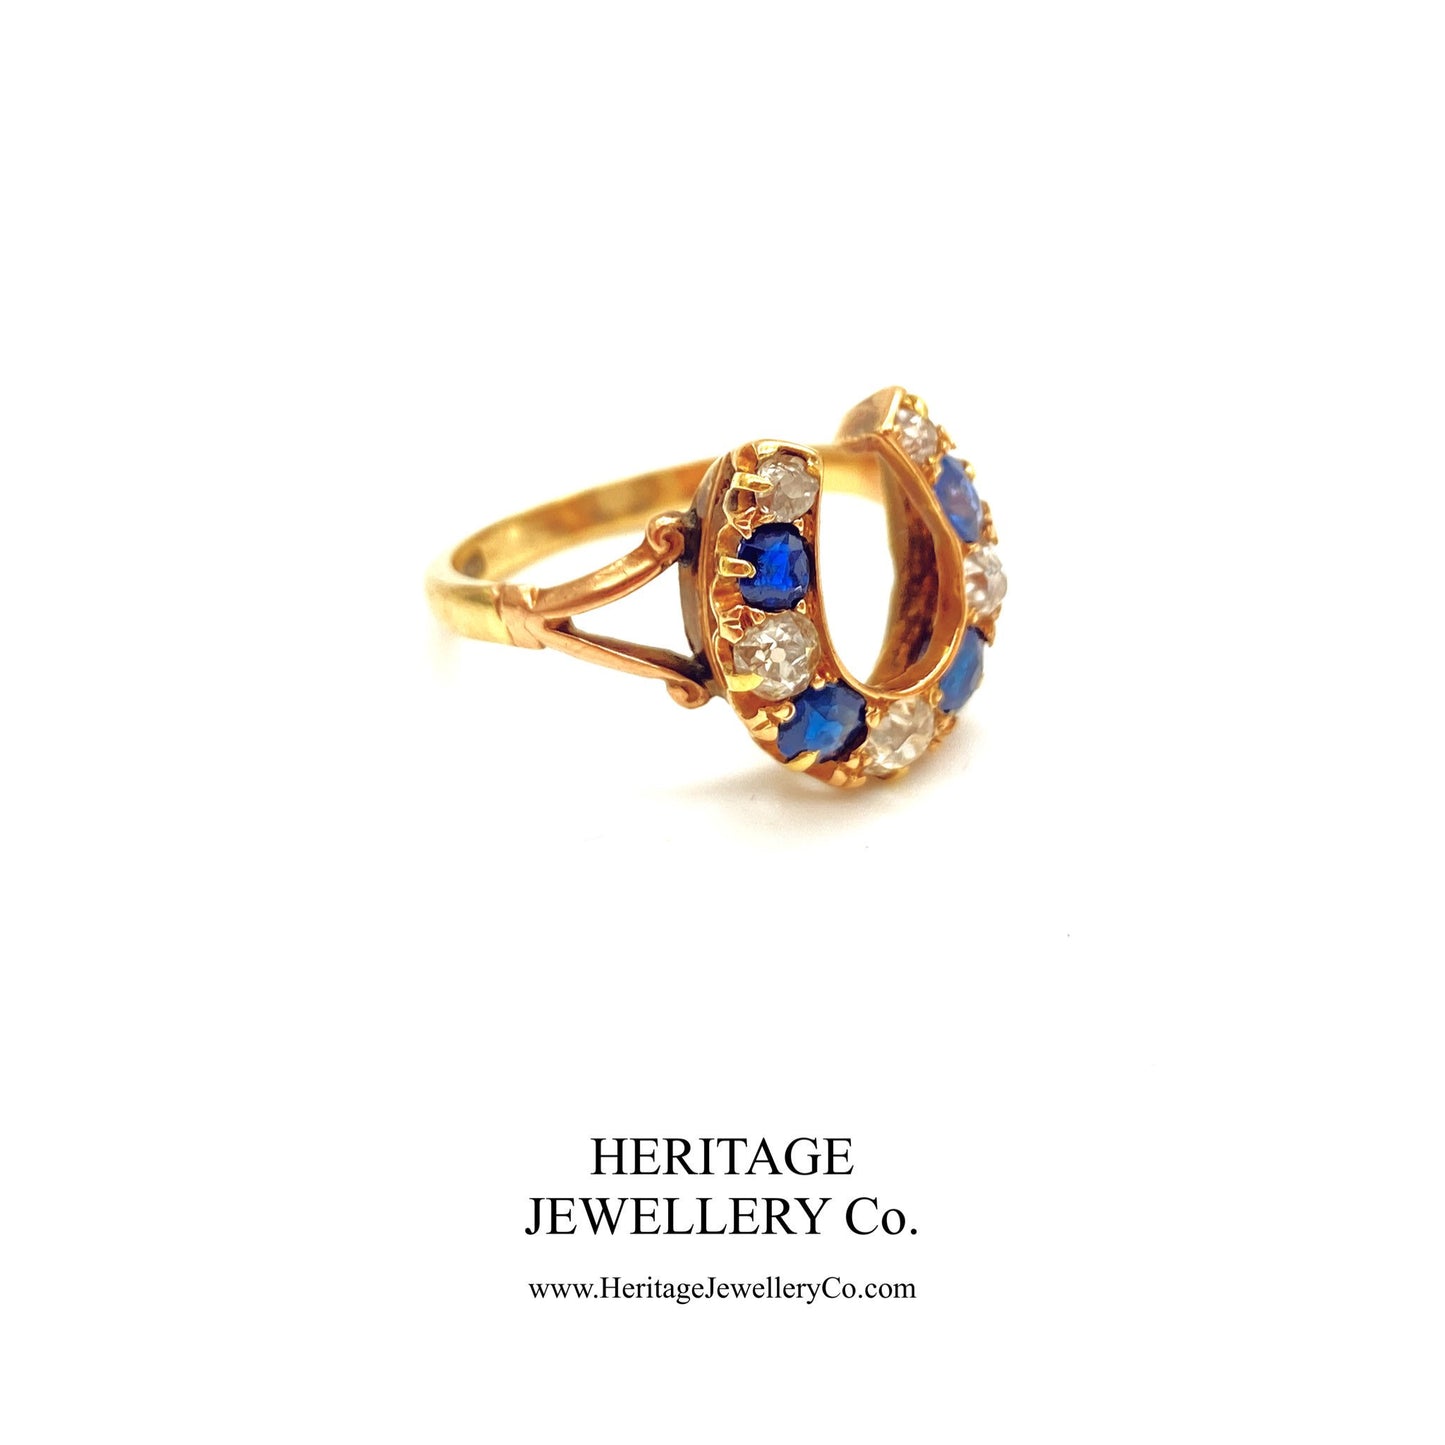 Antique Sapphire and Diamond Horseshoe Ring (c. 1890-1900)